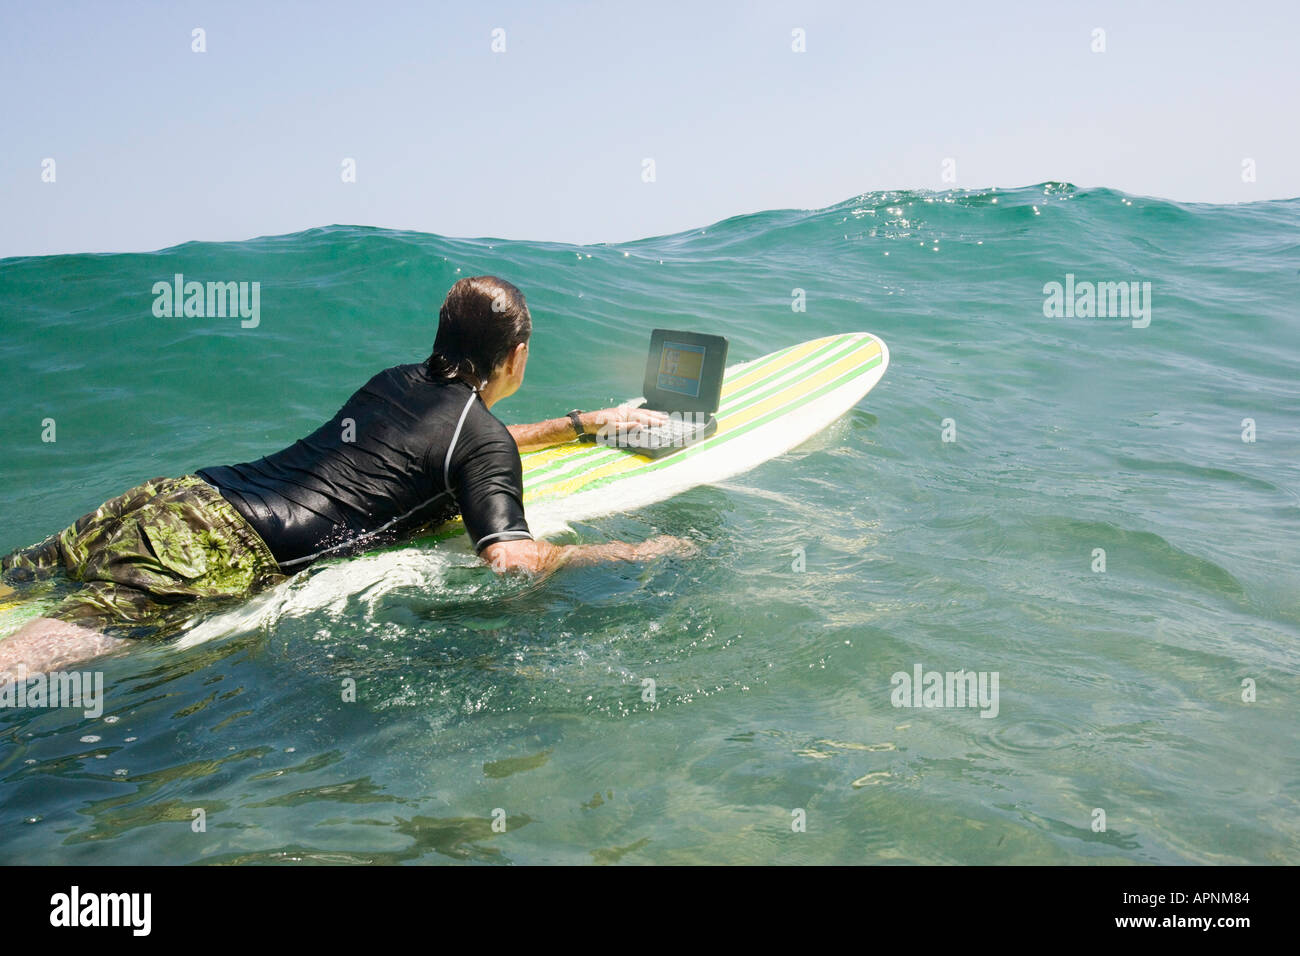 Man using laptop while surfing Stock Photo - Alamy